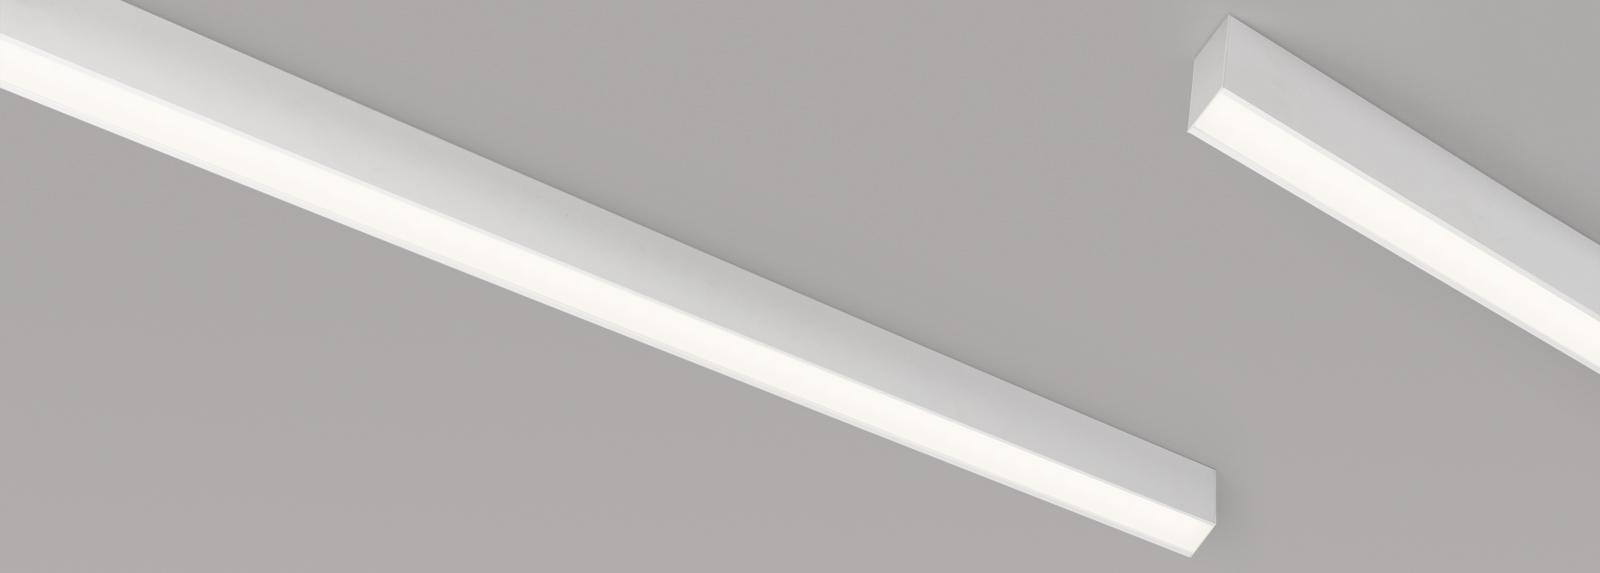 TIRET 300 | Downlights lineals de superfície